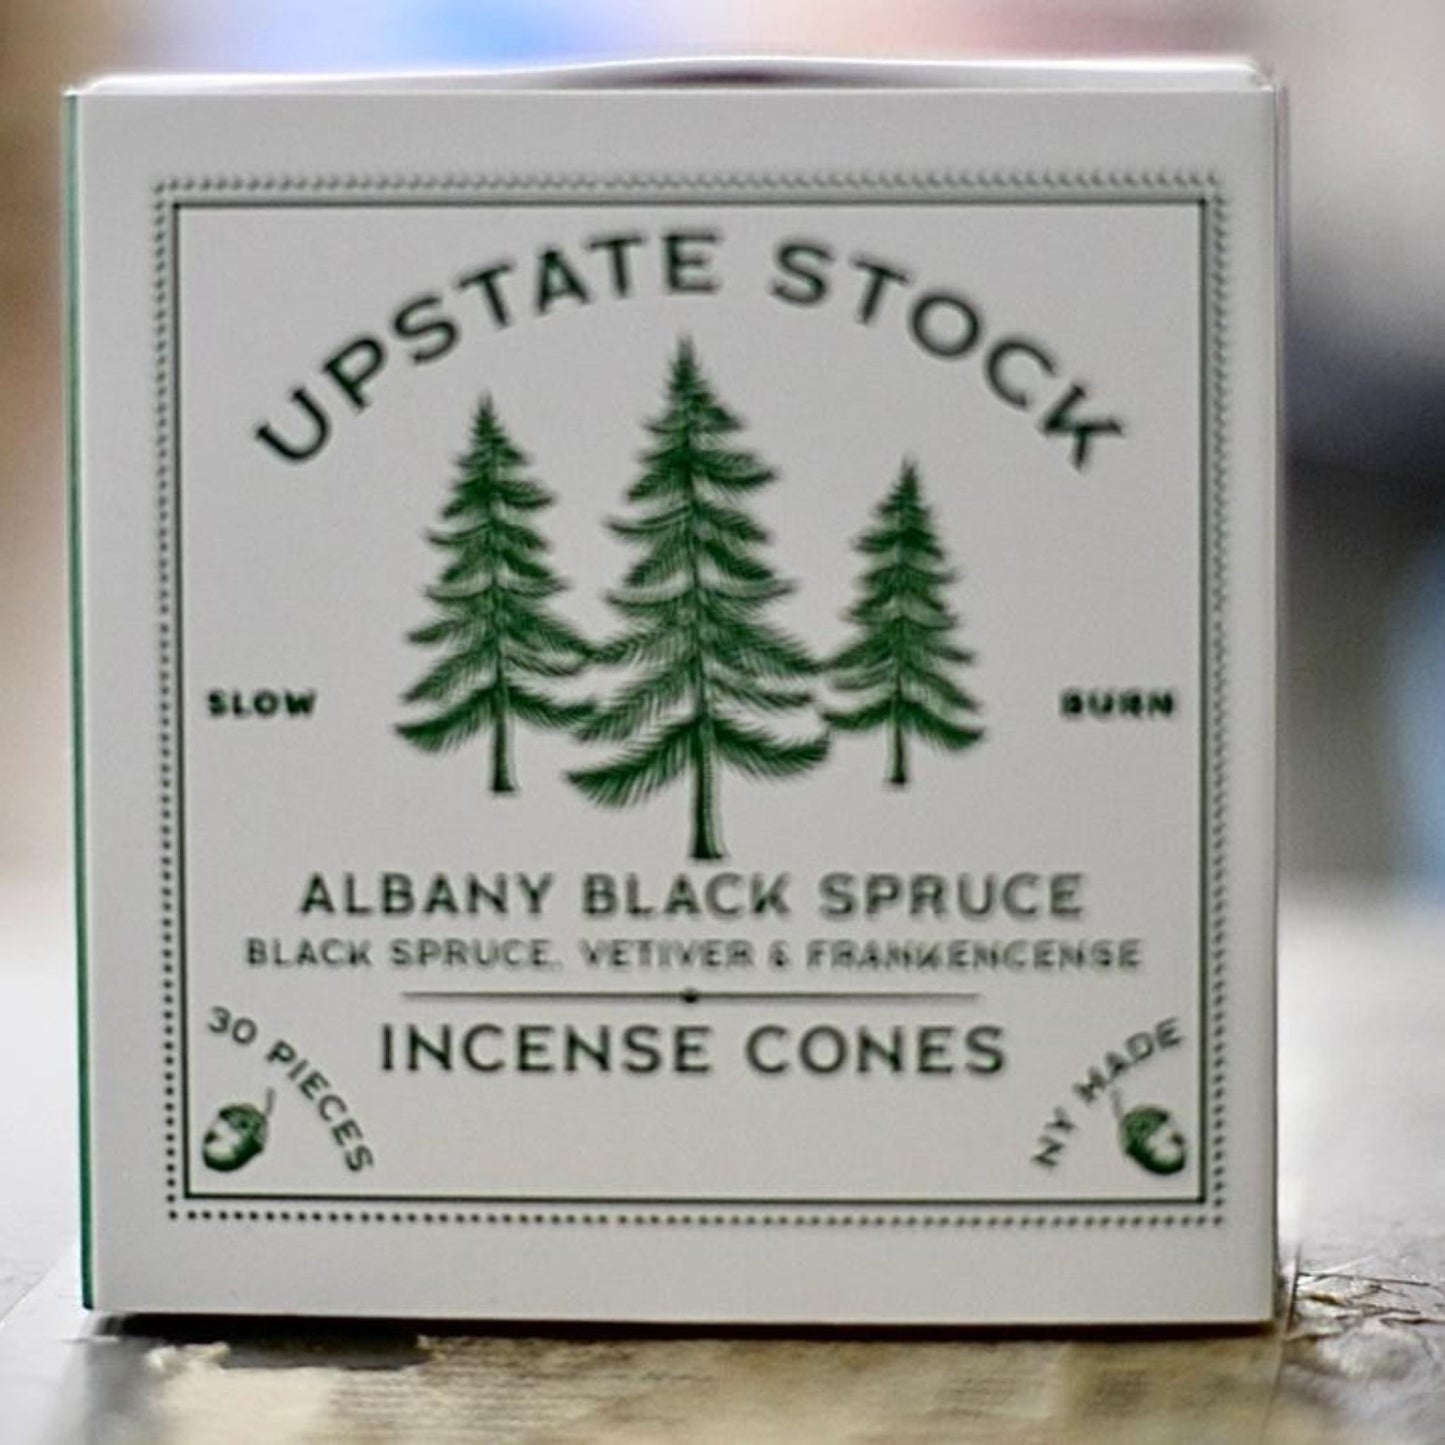 Slow Burn Upstate Stock Incense Cones